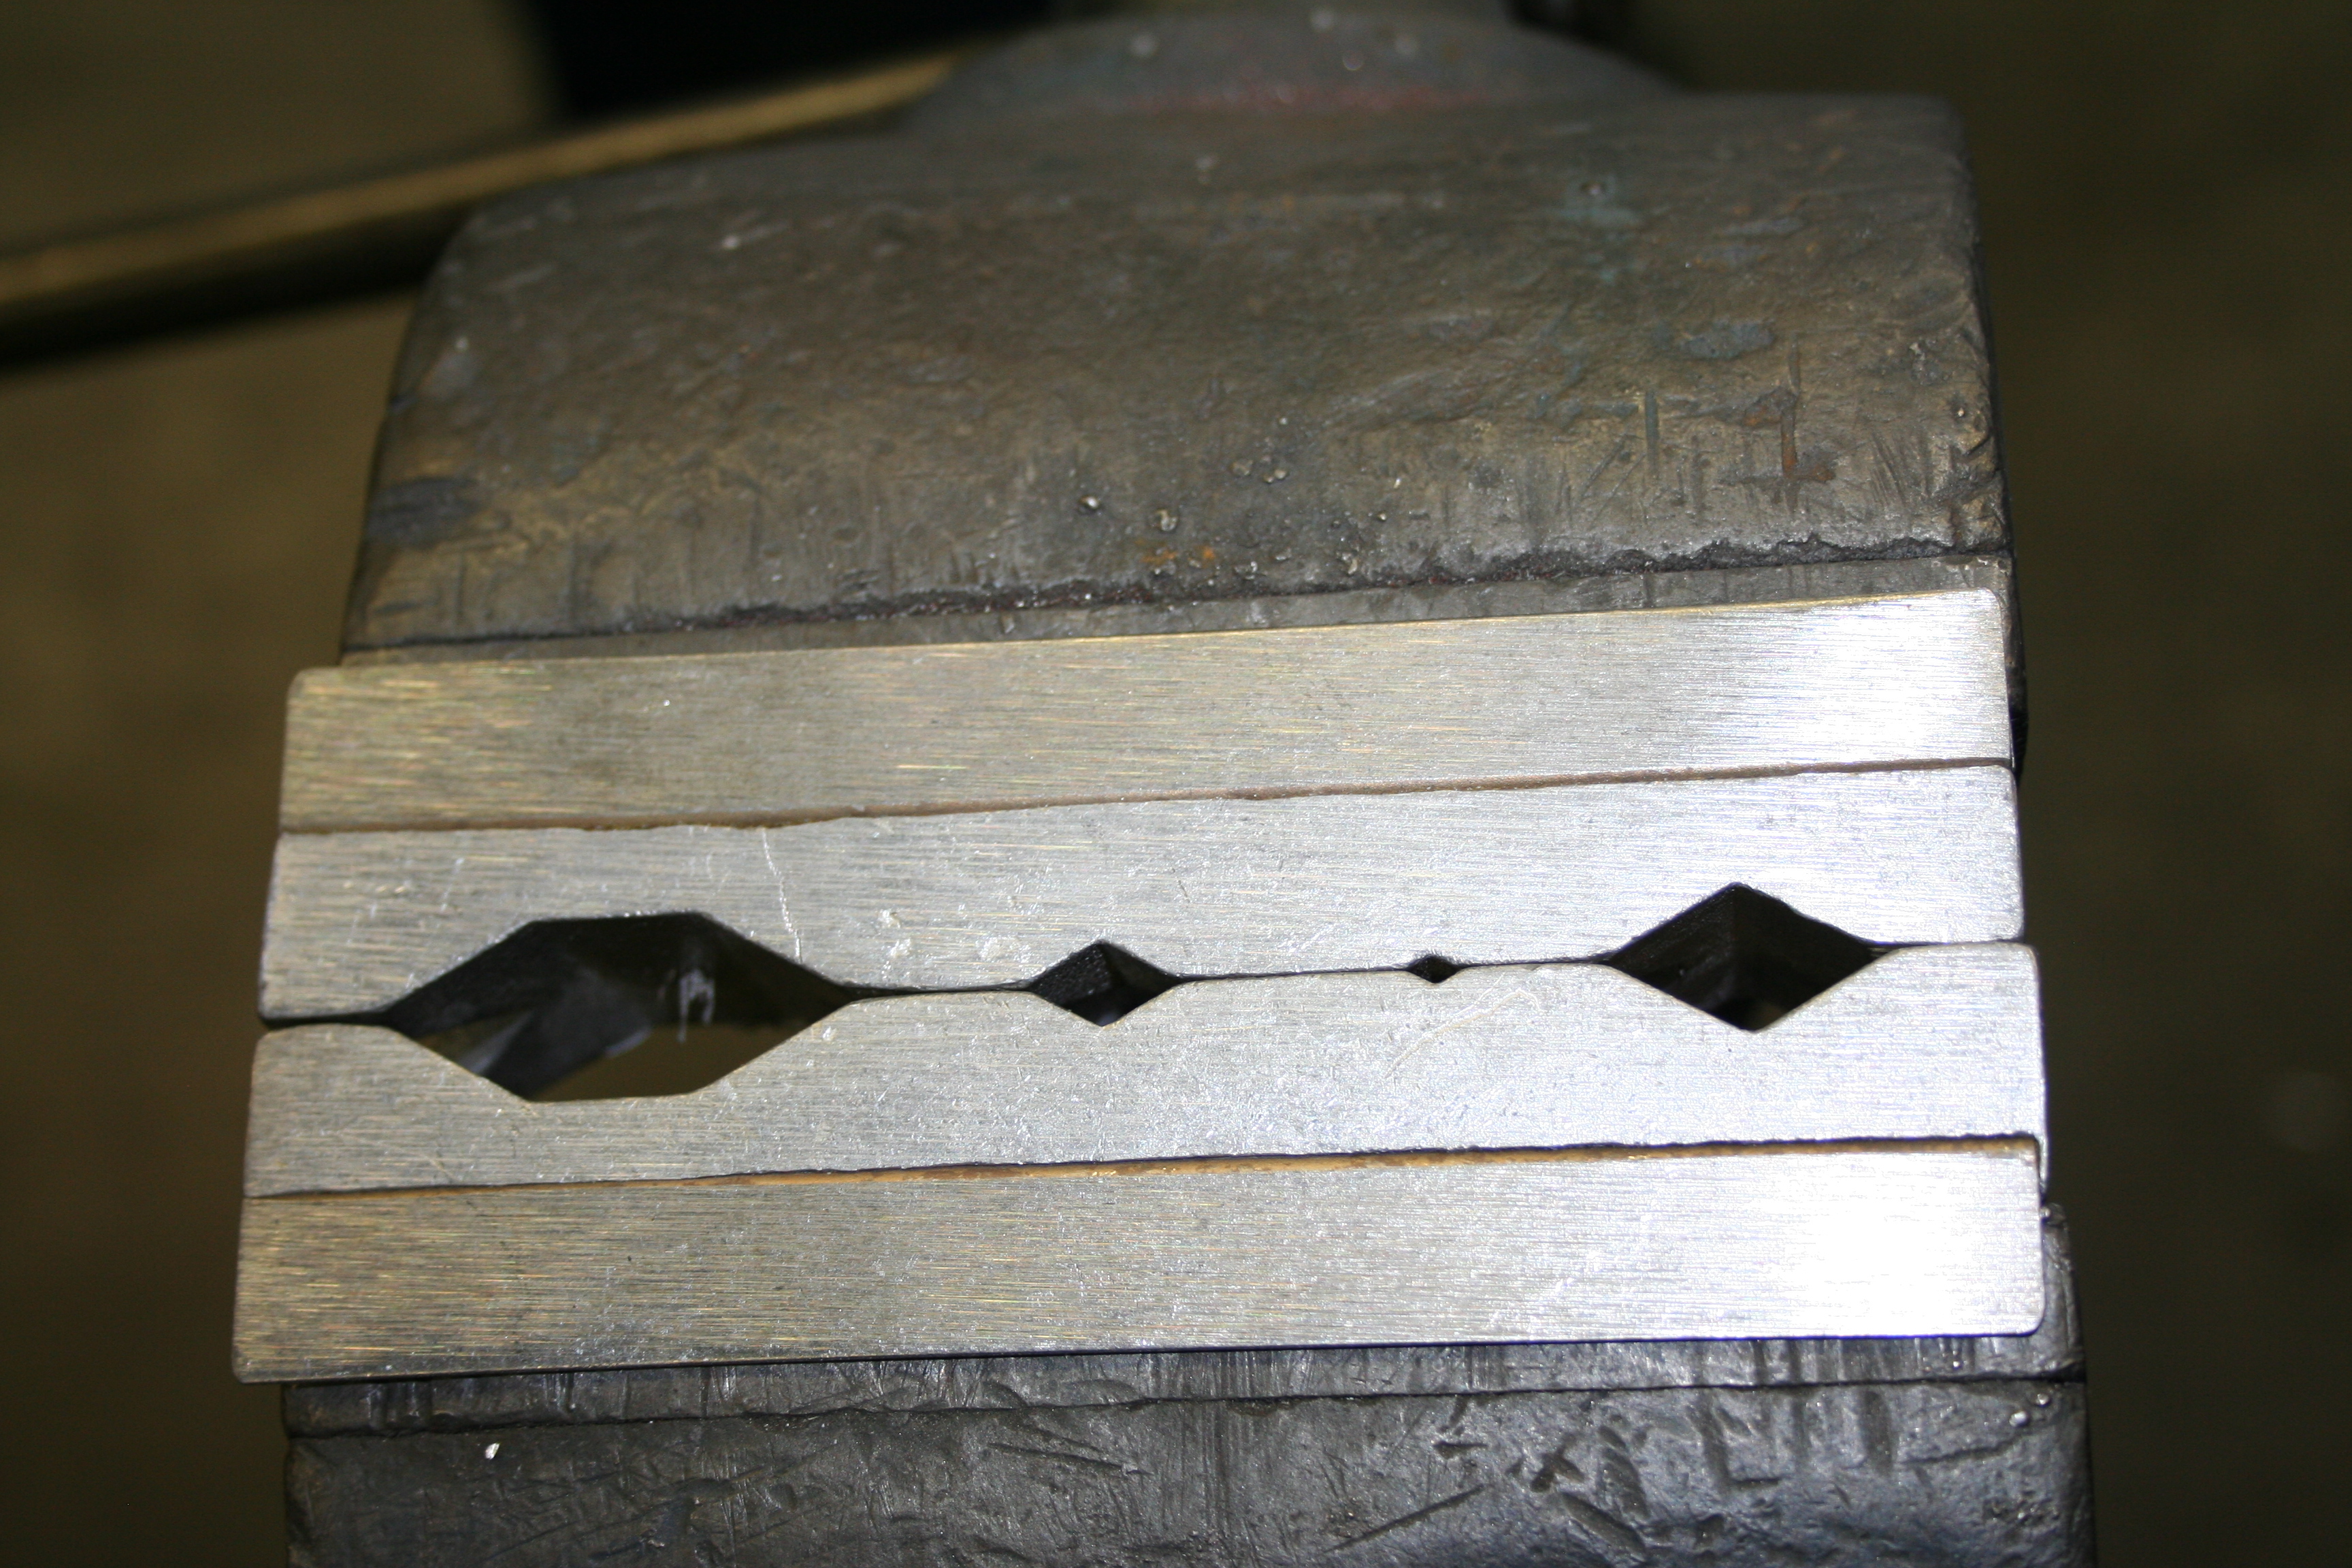 Aluminium Schraubstockbacken mit eingeleimten Magneten